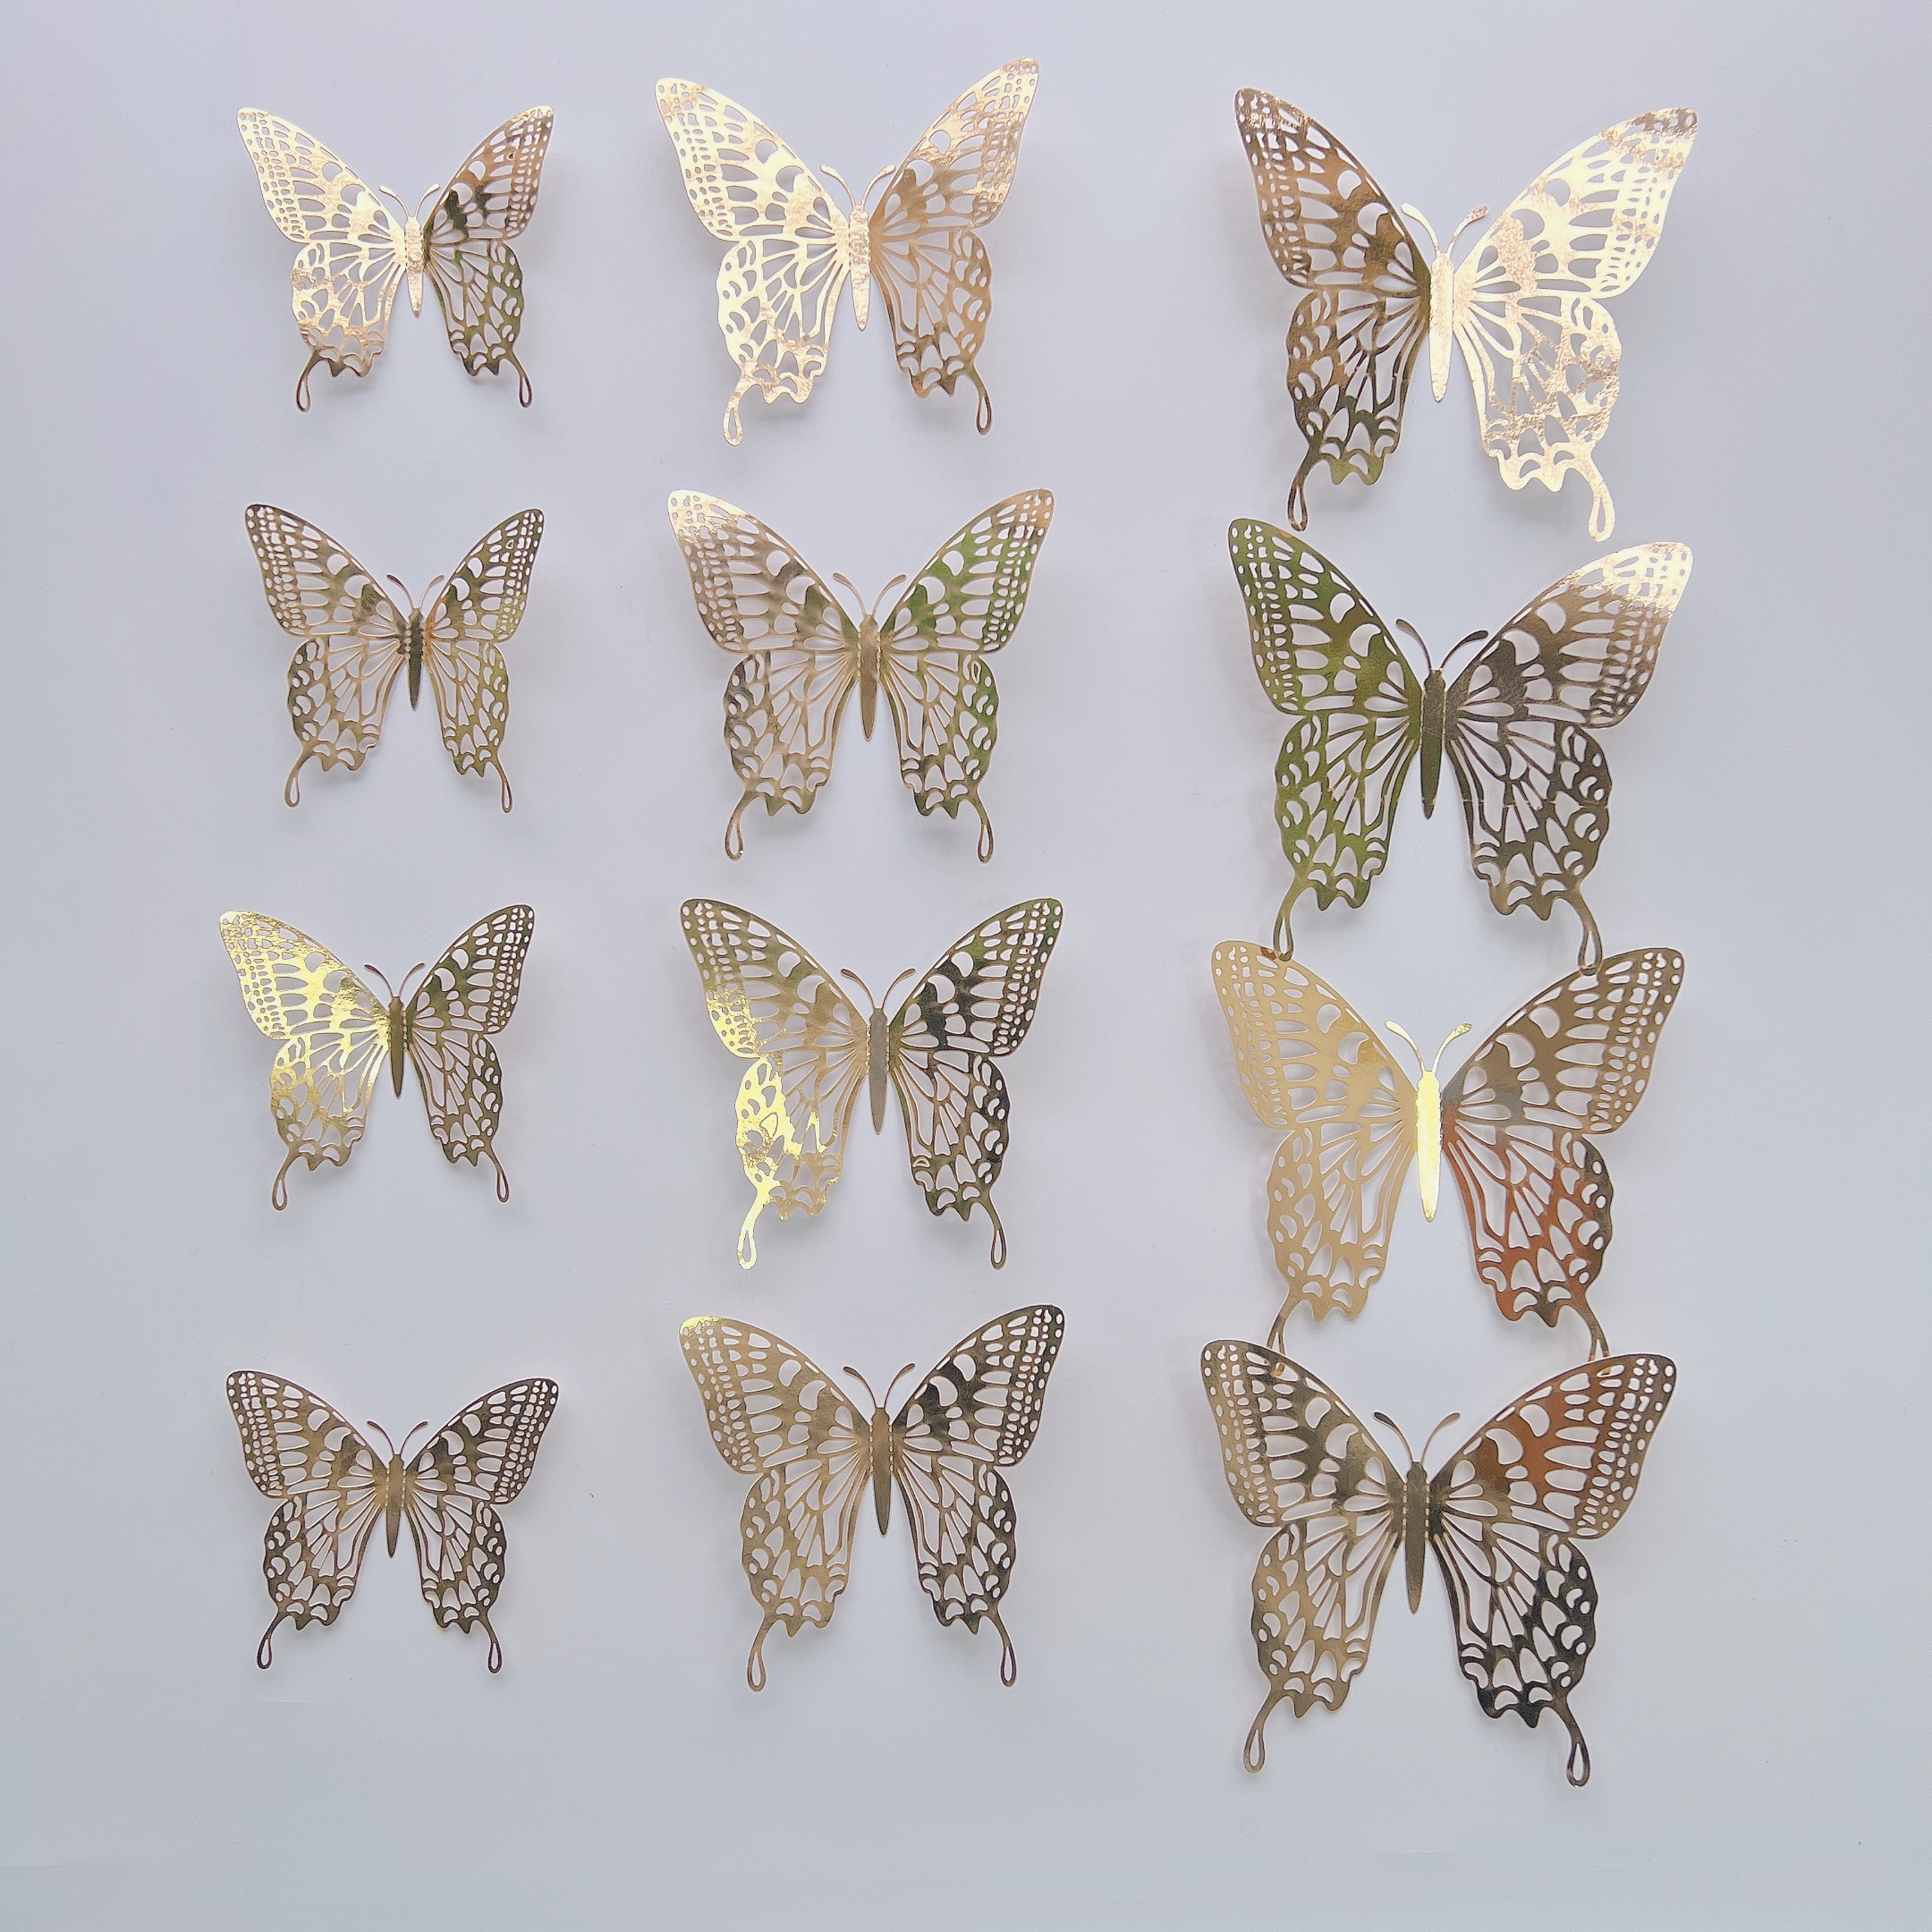 Butterfly Cardboard Decoration, 3d Butterflies Wall Sticker